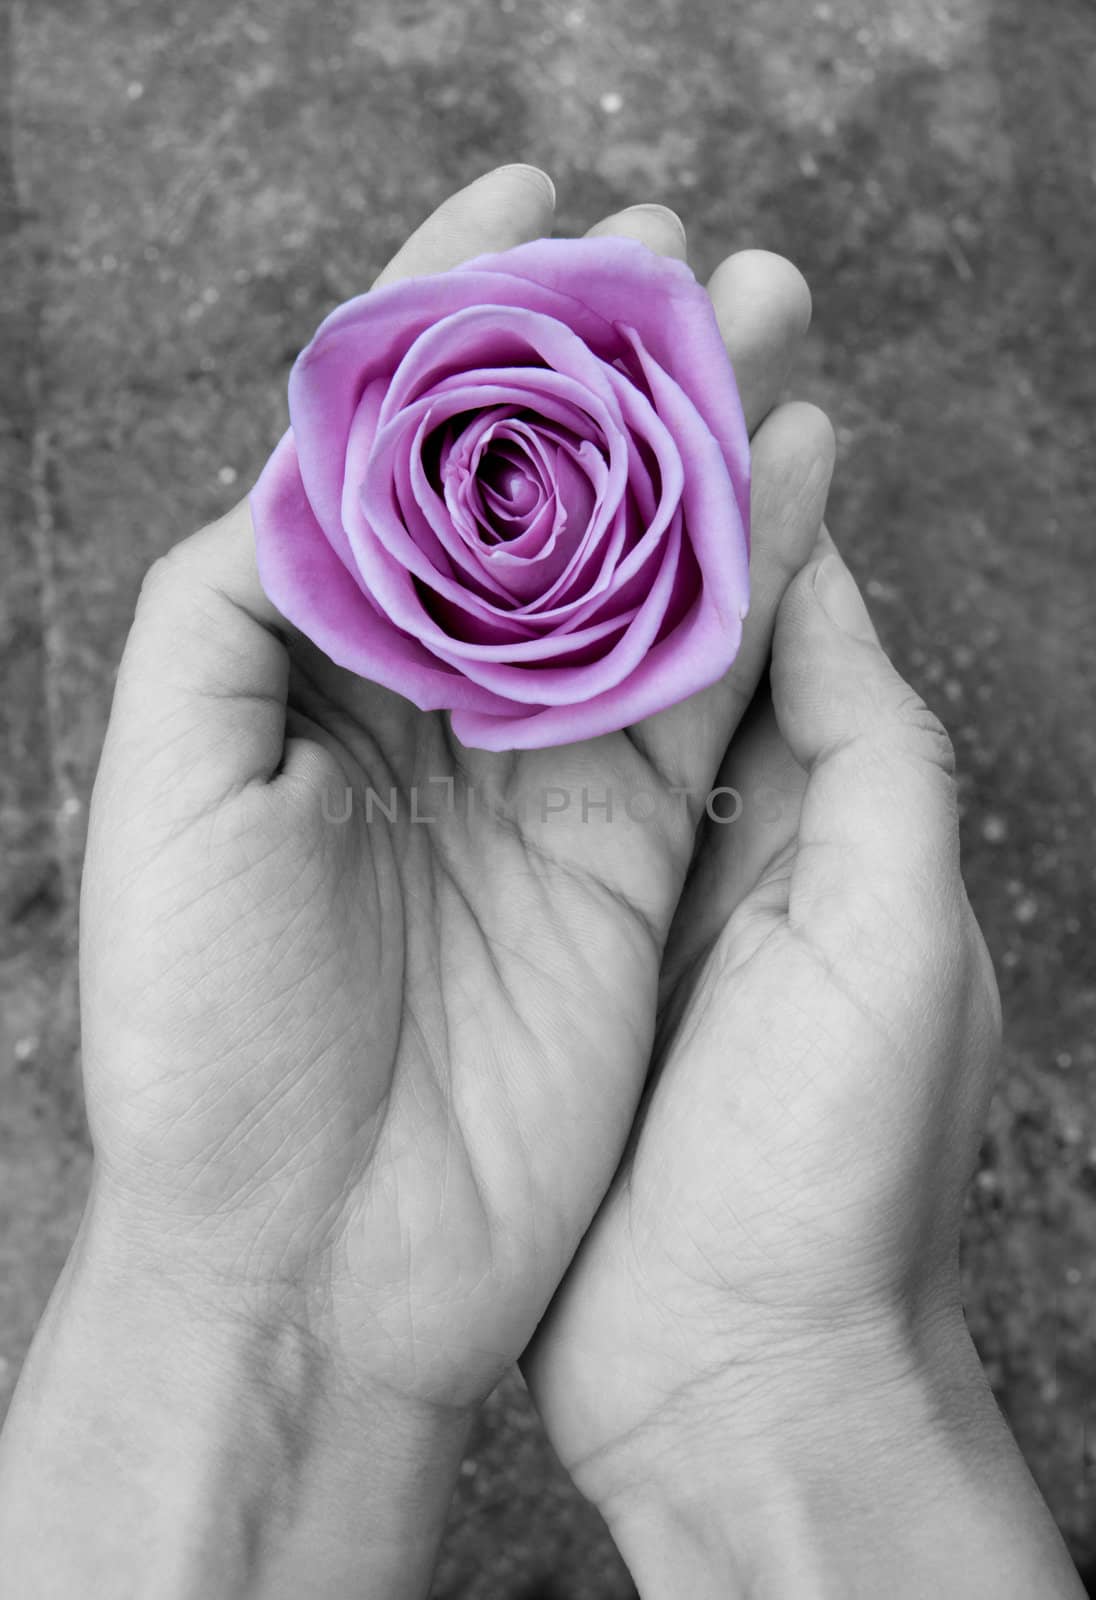 Rose in hands by unikpix